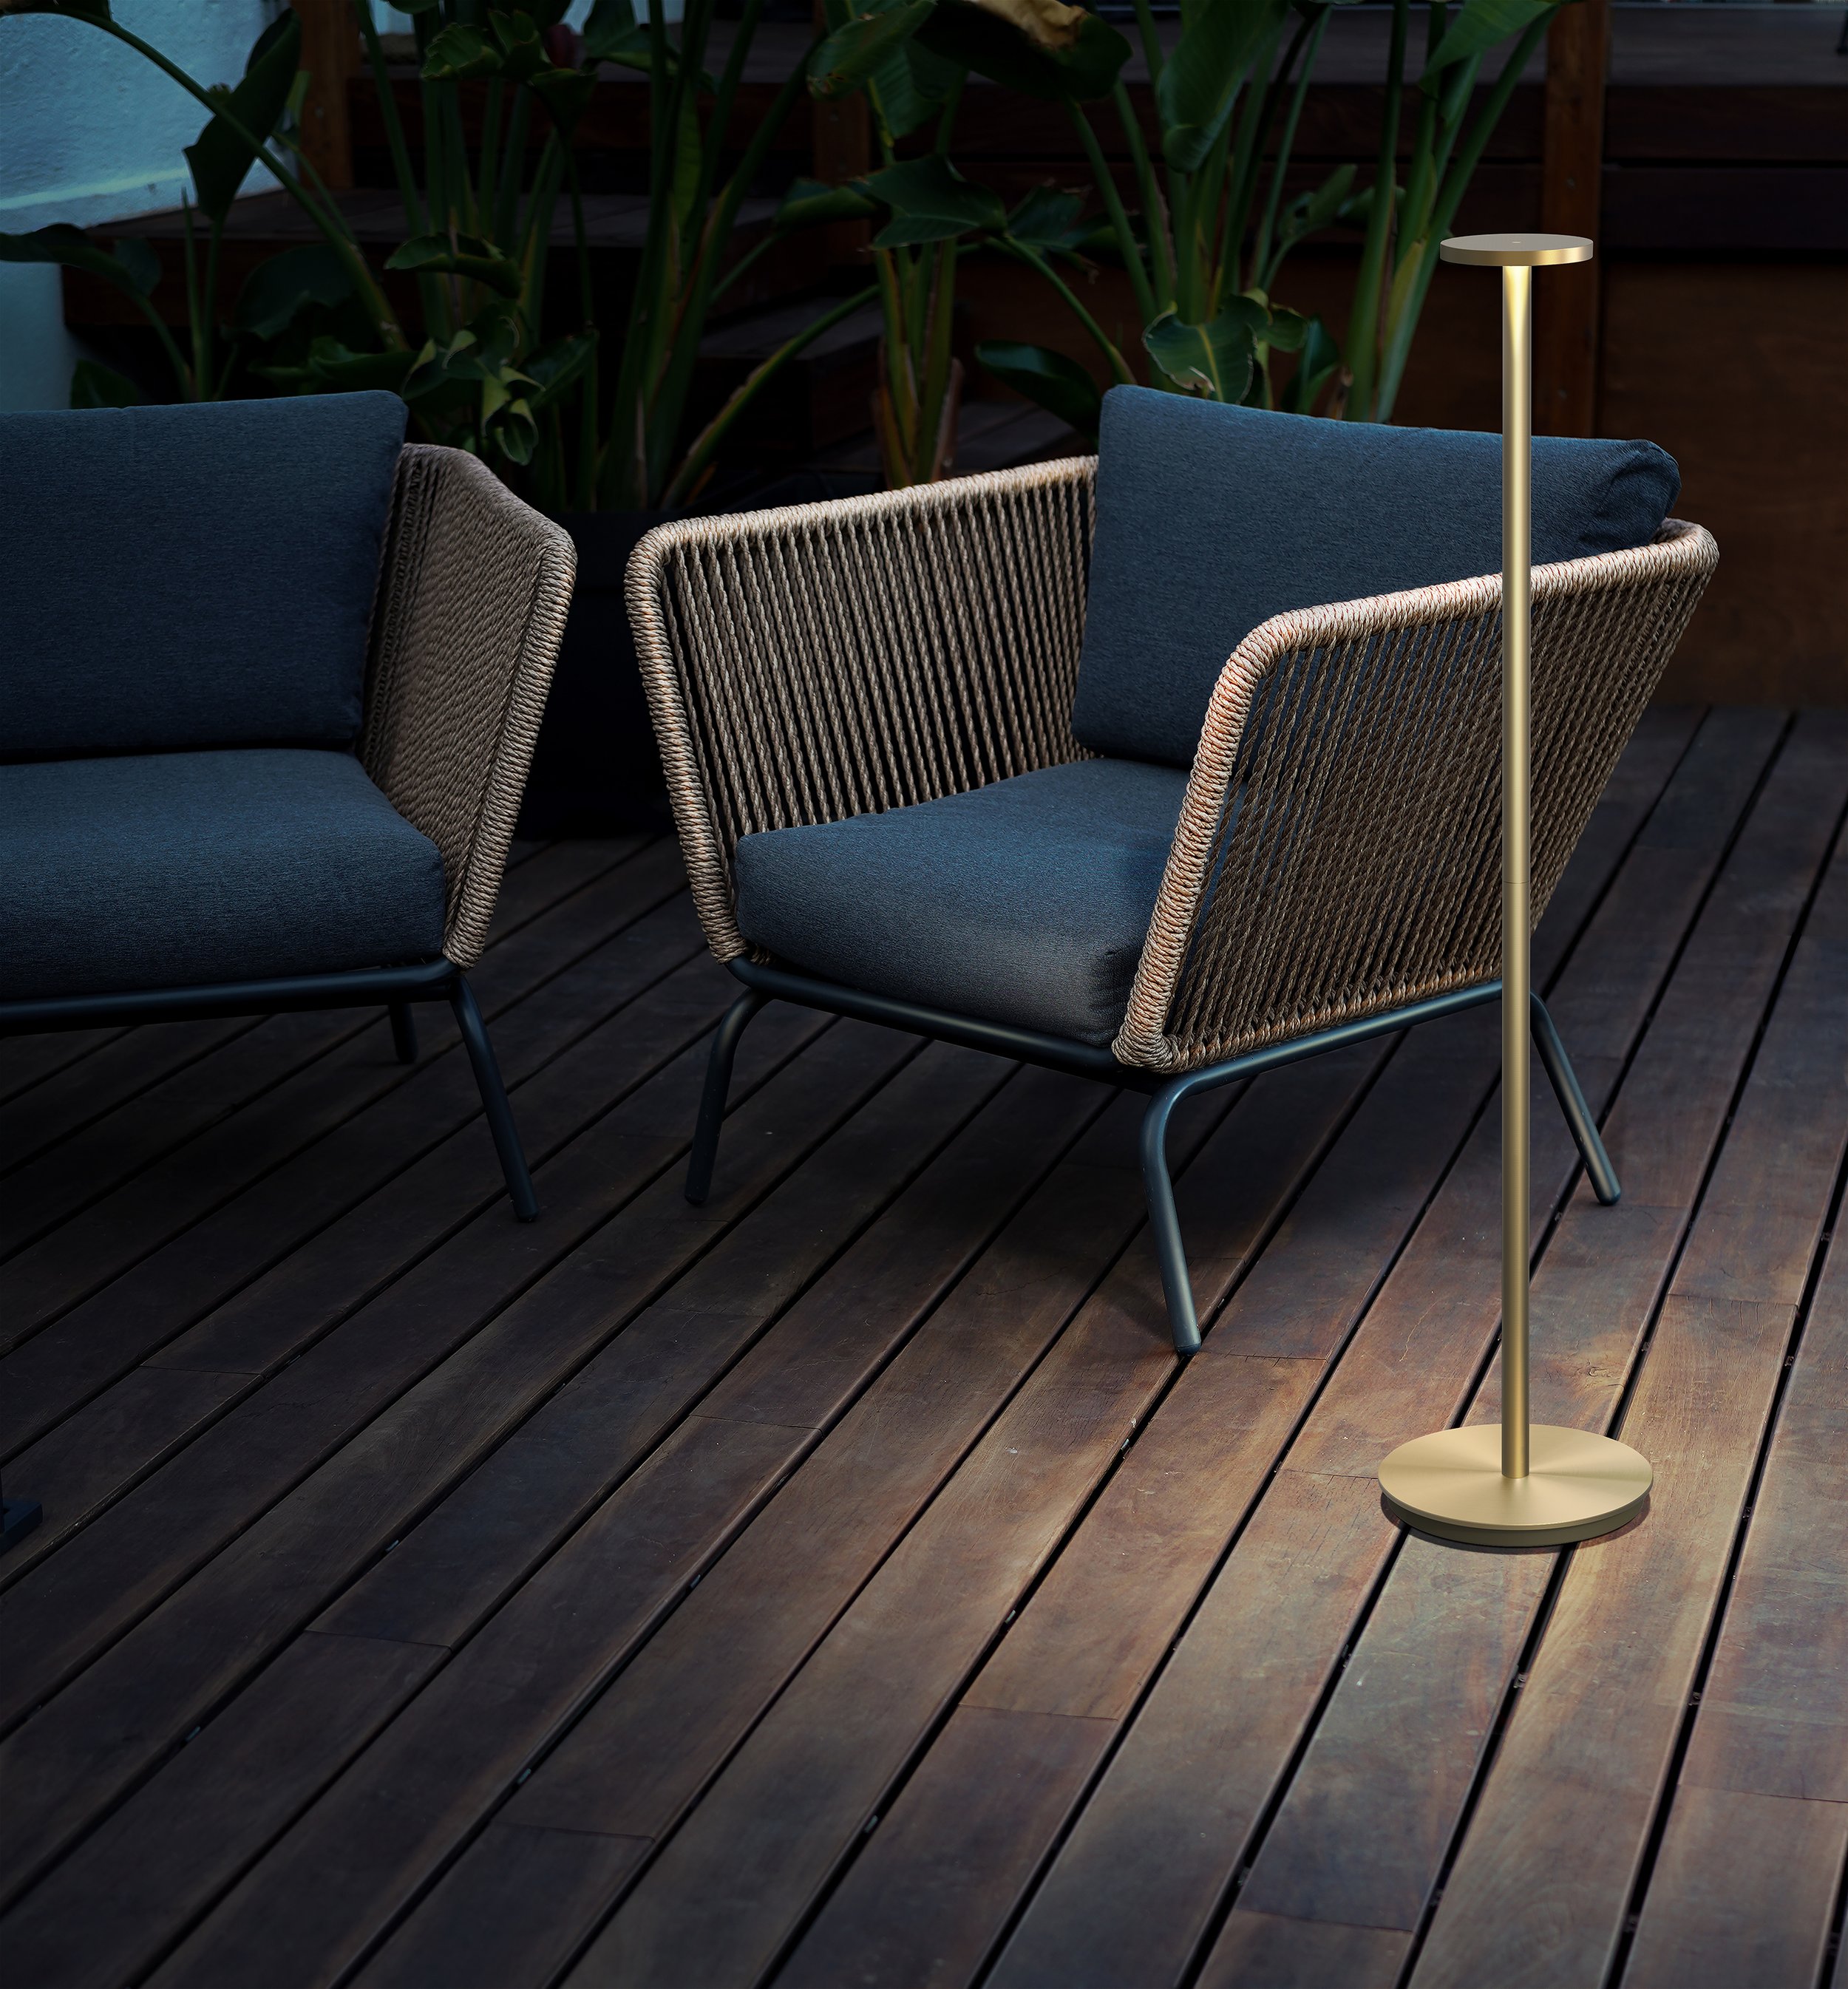 Pablo Designs - Luci Floor - Environmental Image - Brass - Deck Chairs_300.jpg